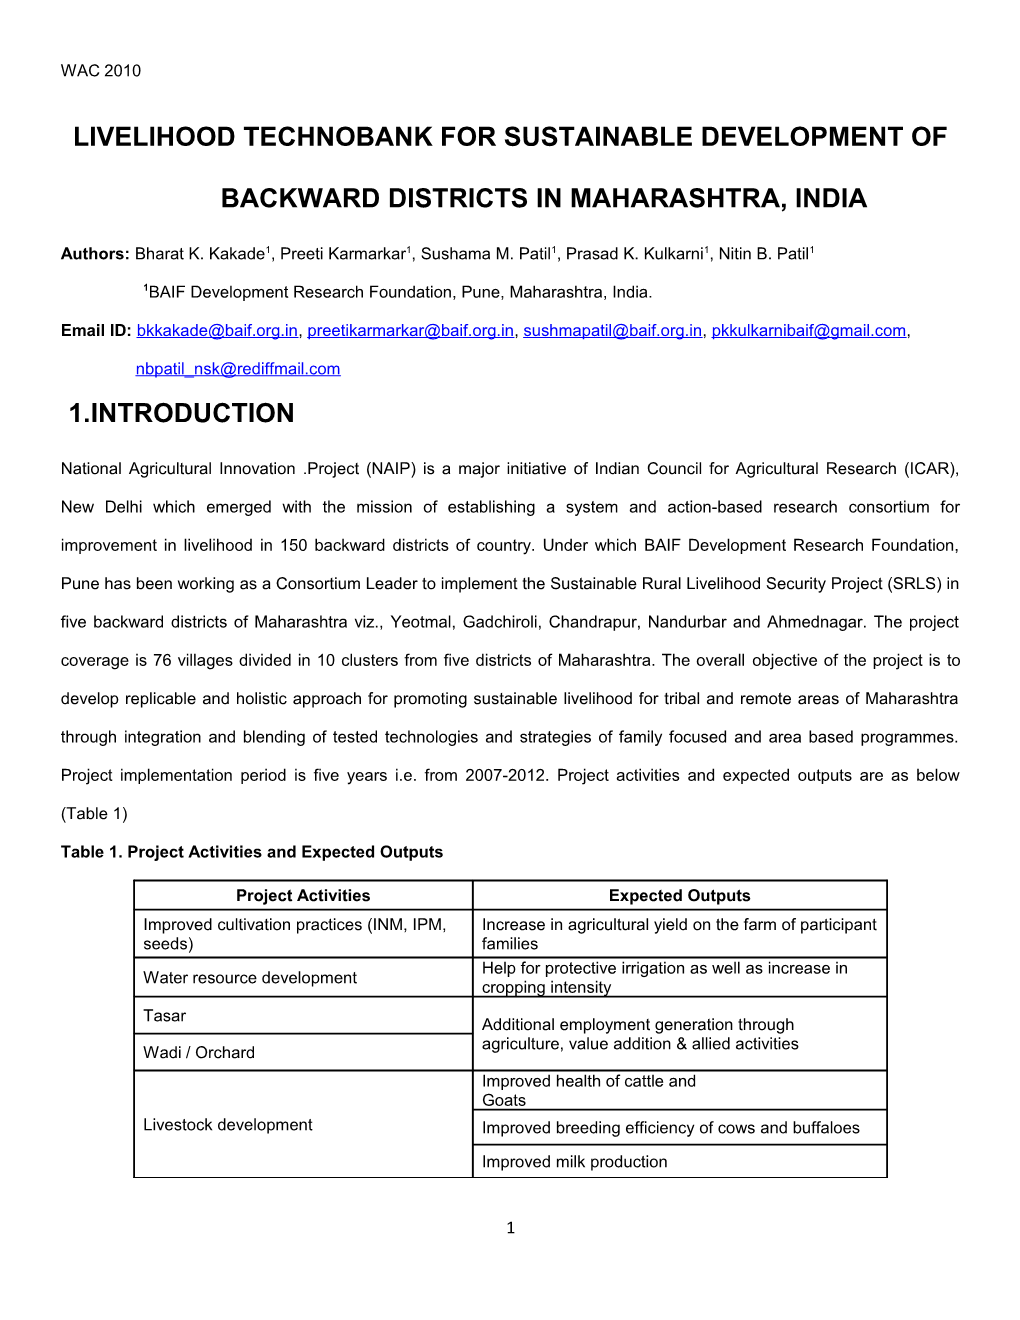 Livelihood Technobank for Sustainable Development of Backward Districts in Maharashtra, India